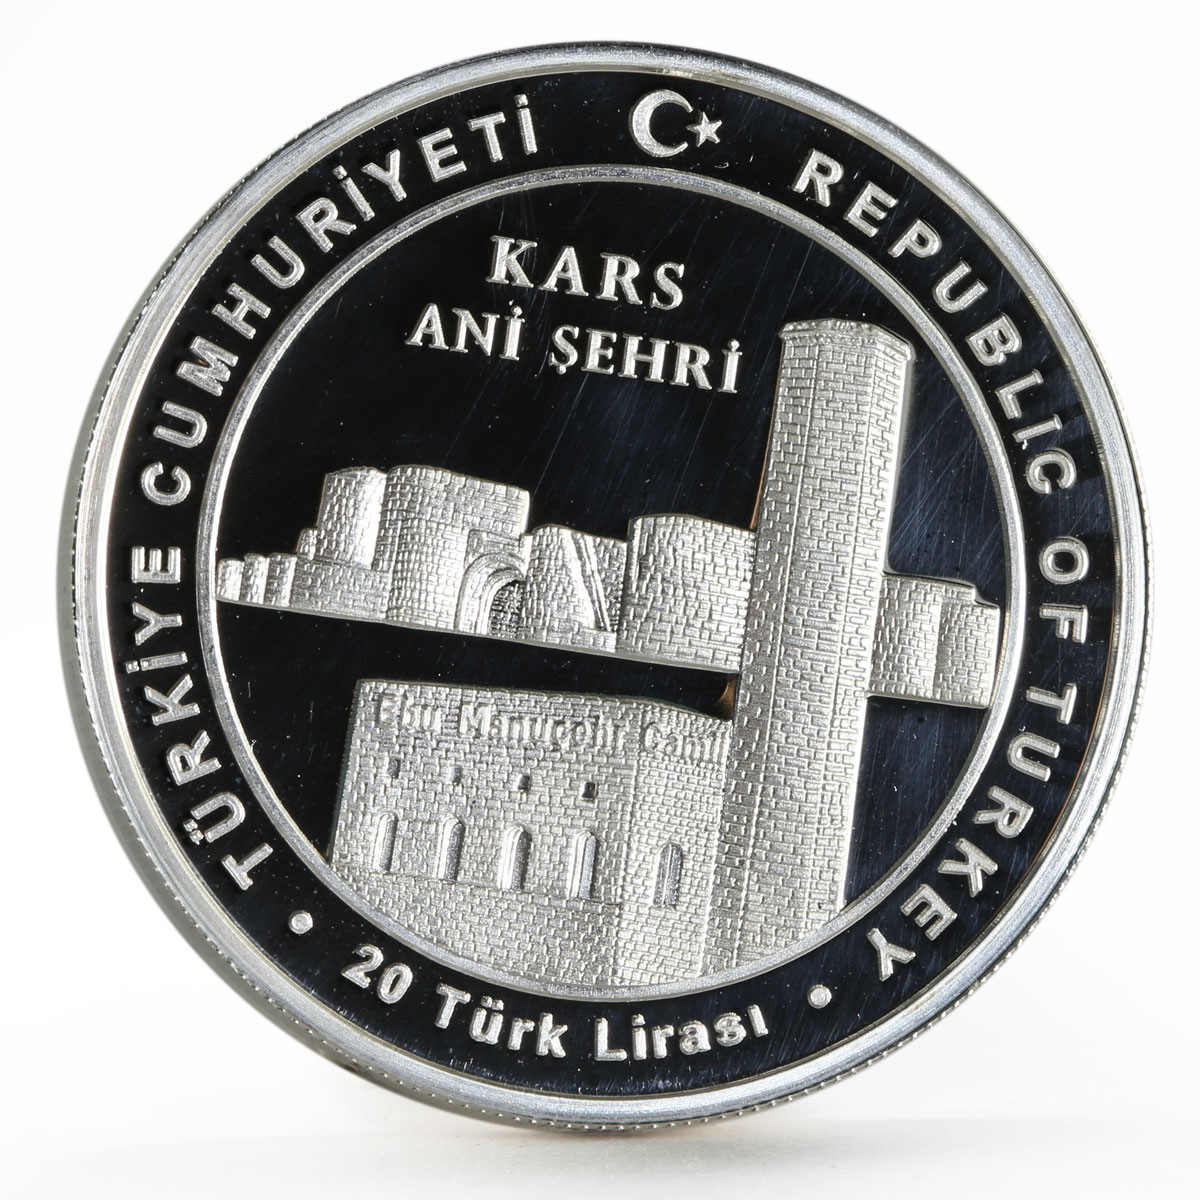 Turkey 20 lira 950 years accession throne Alp Arslan proof silver coin 2014